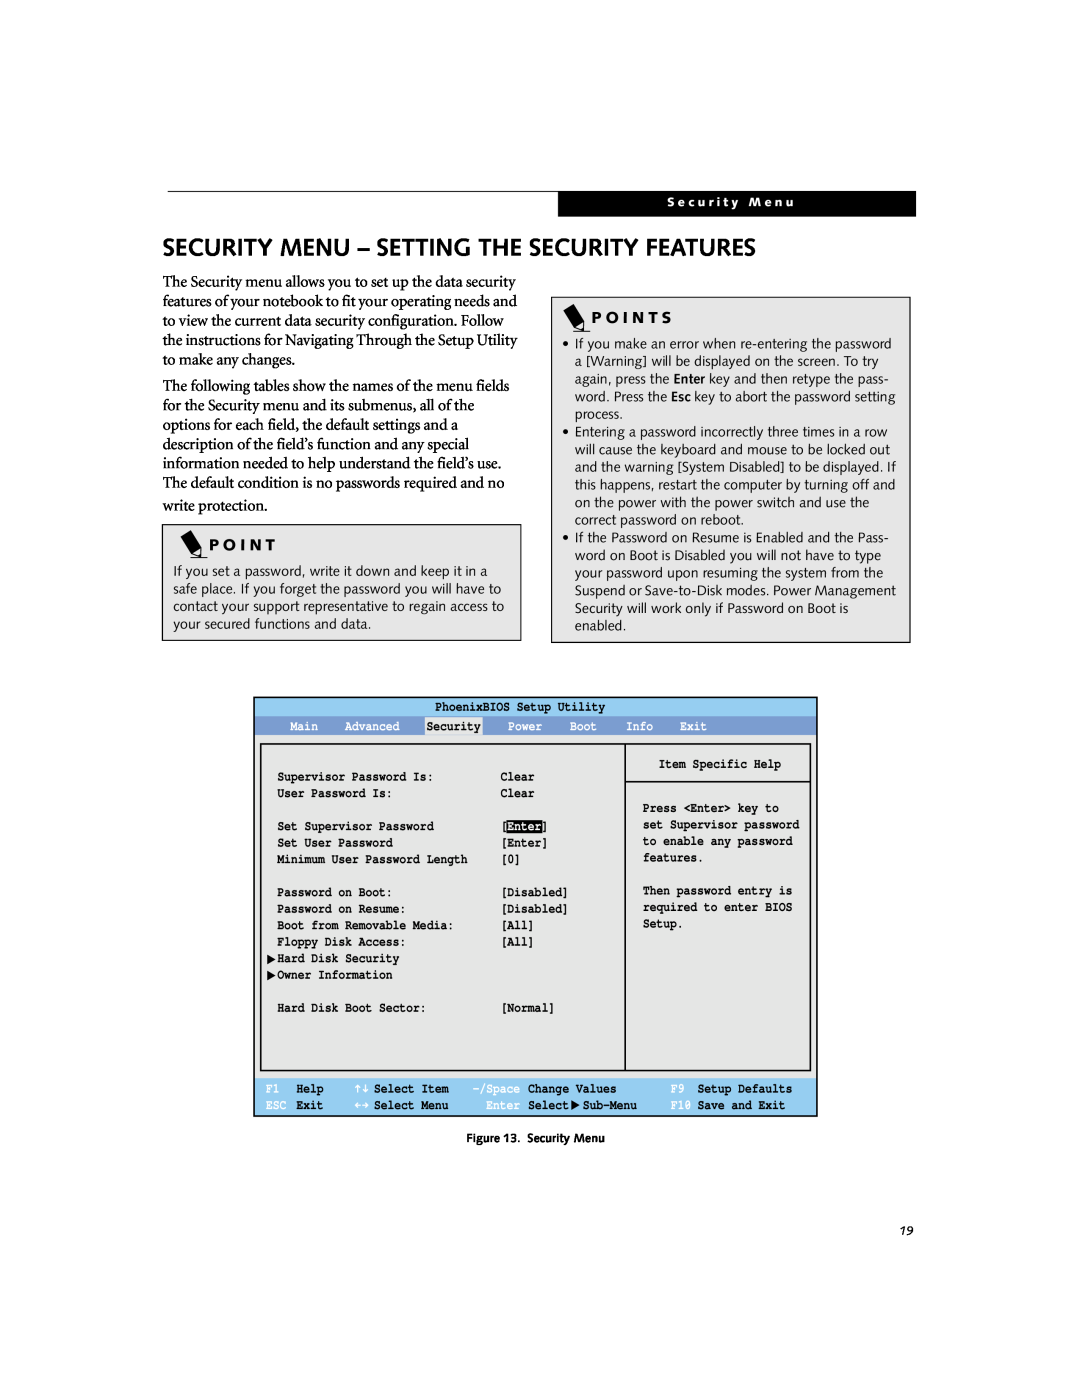 Fujitsu P-2046 manual Security Menu - Setting The Security Features, P O I N T S 